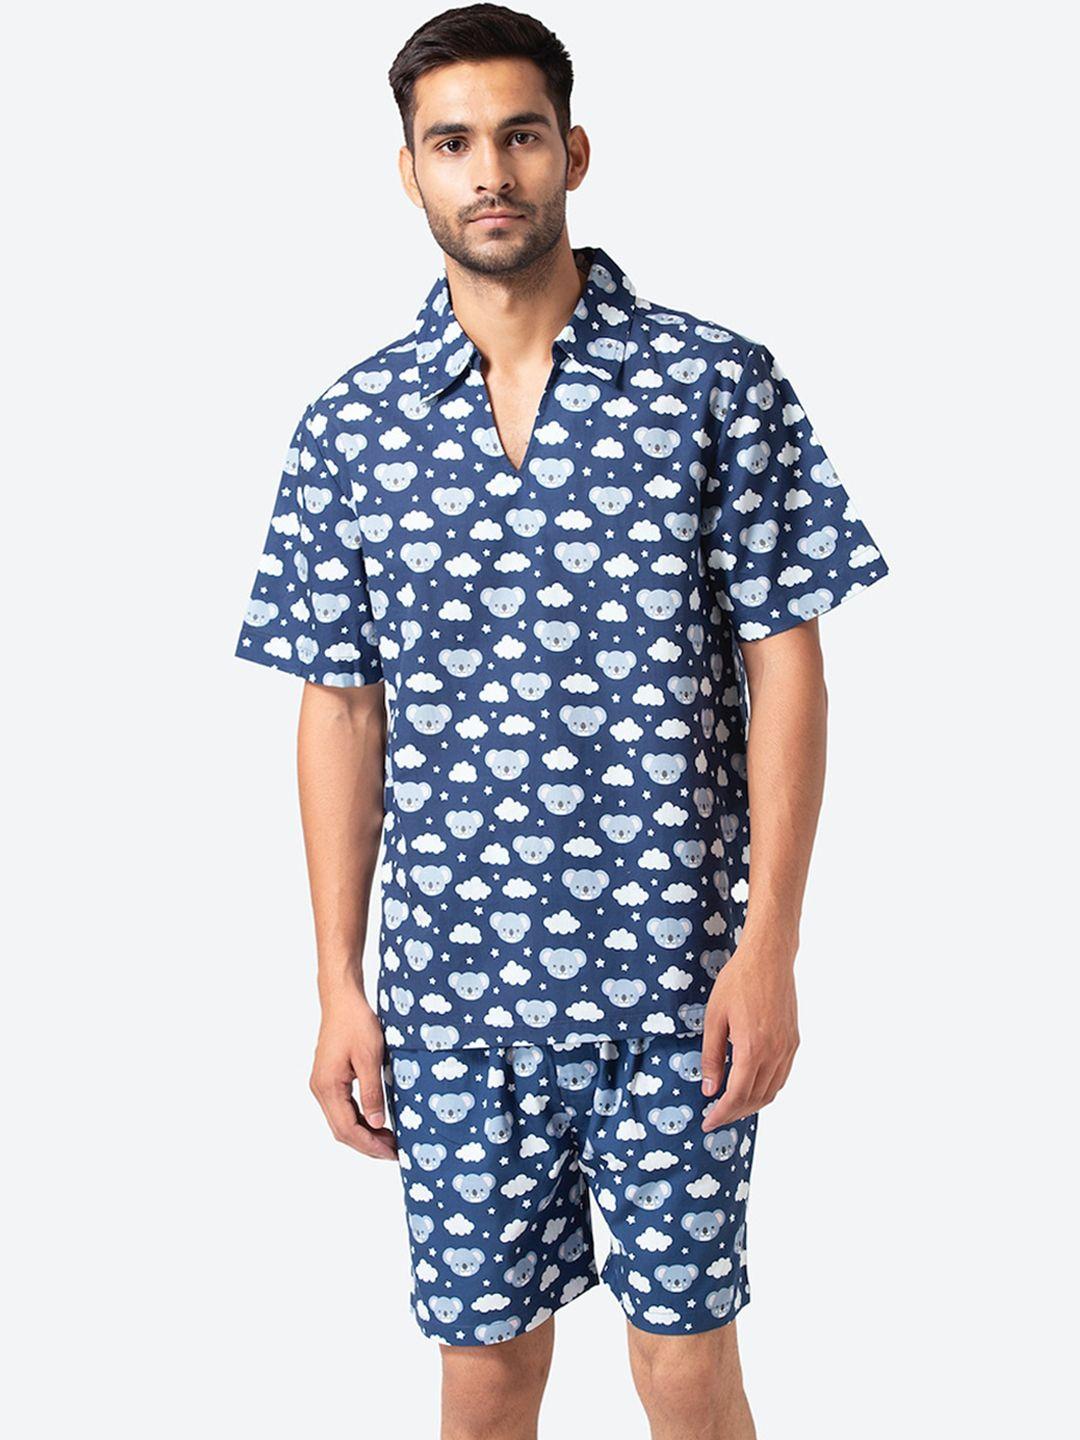 fluffalump men navy blue & grey cotton printed night suit